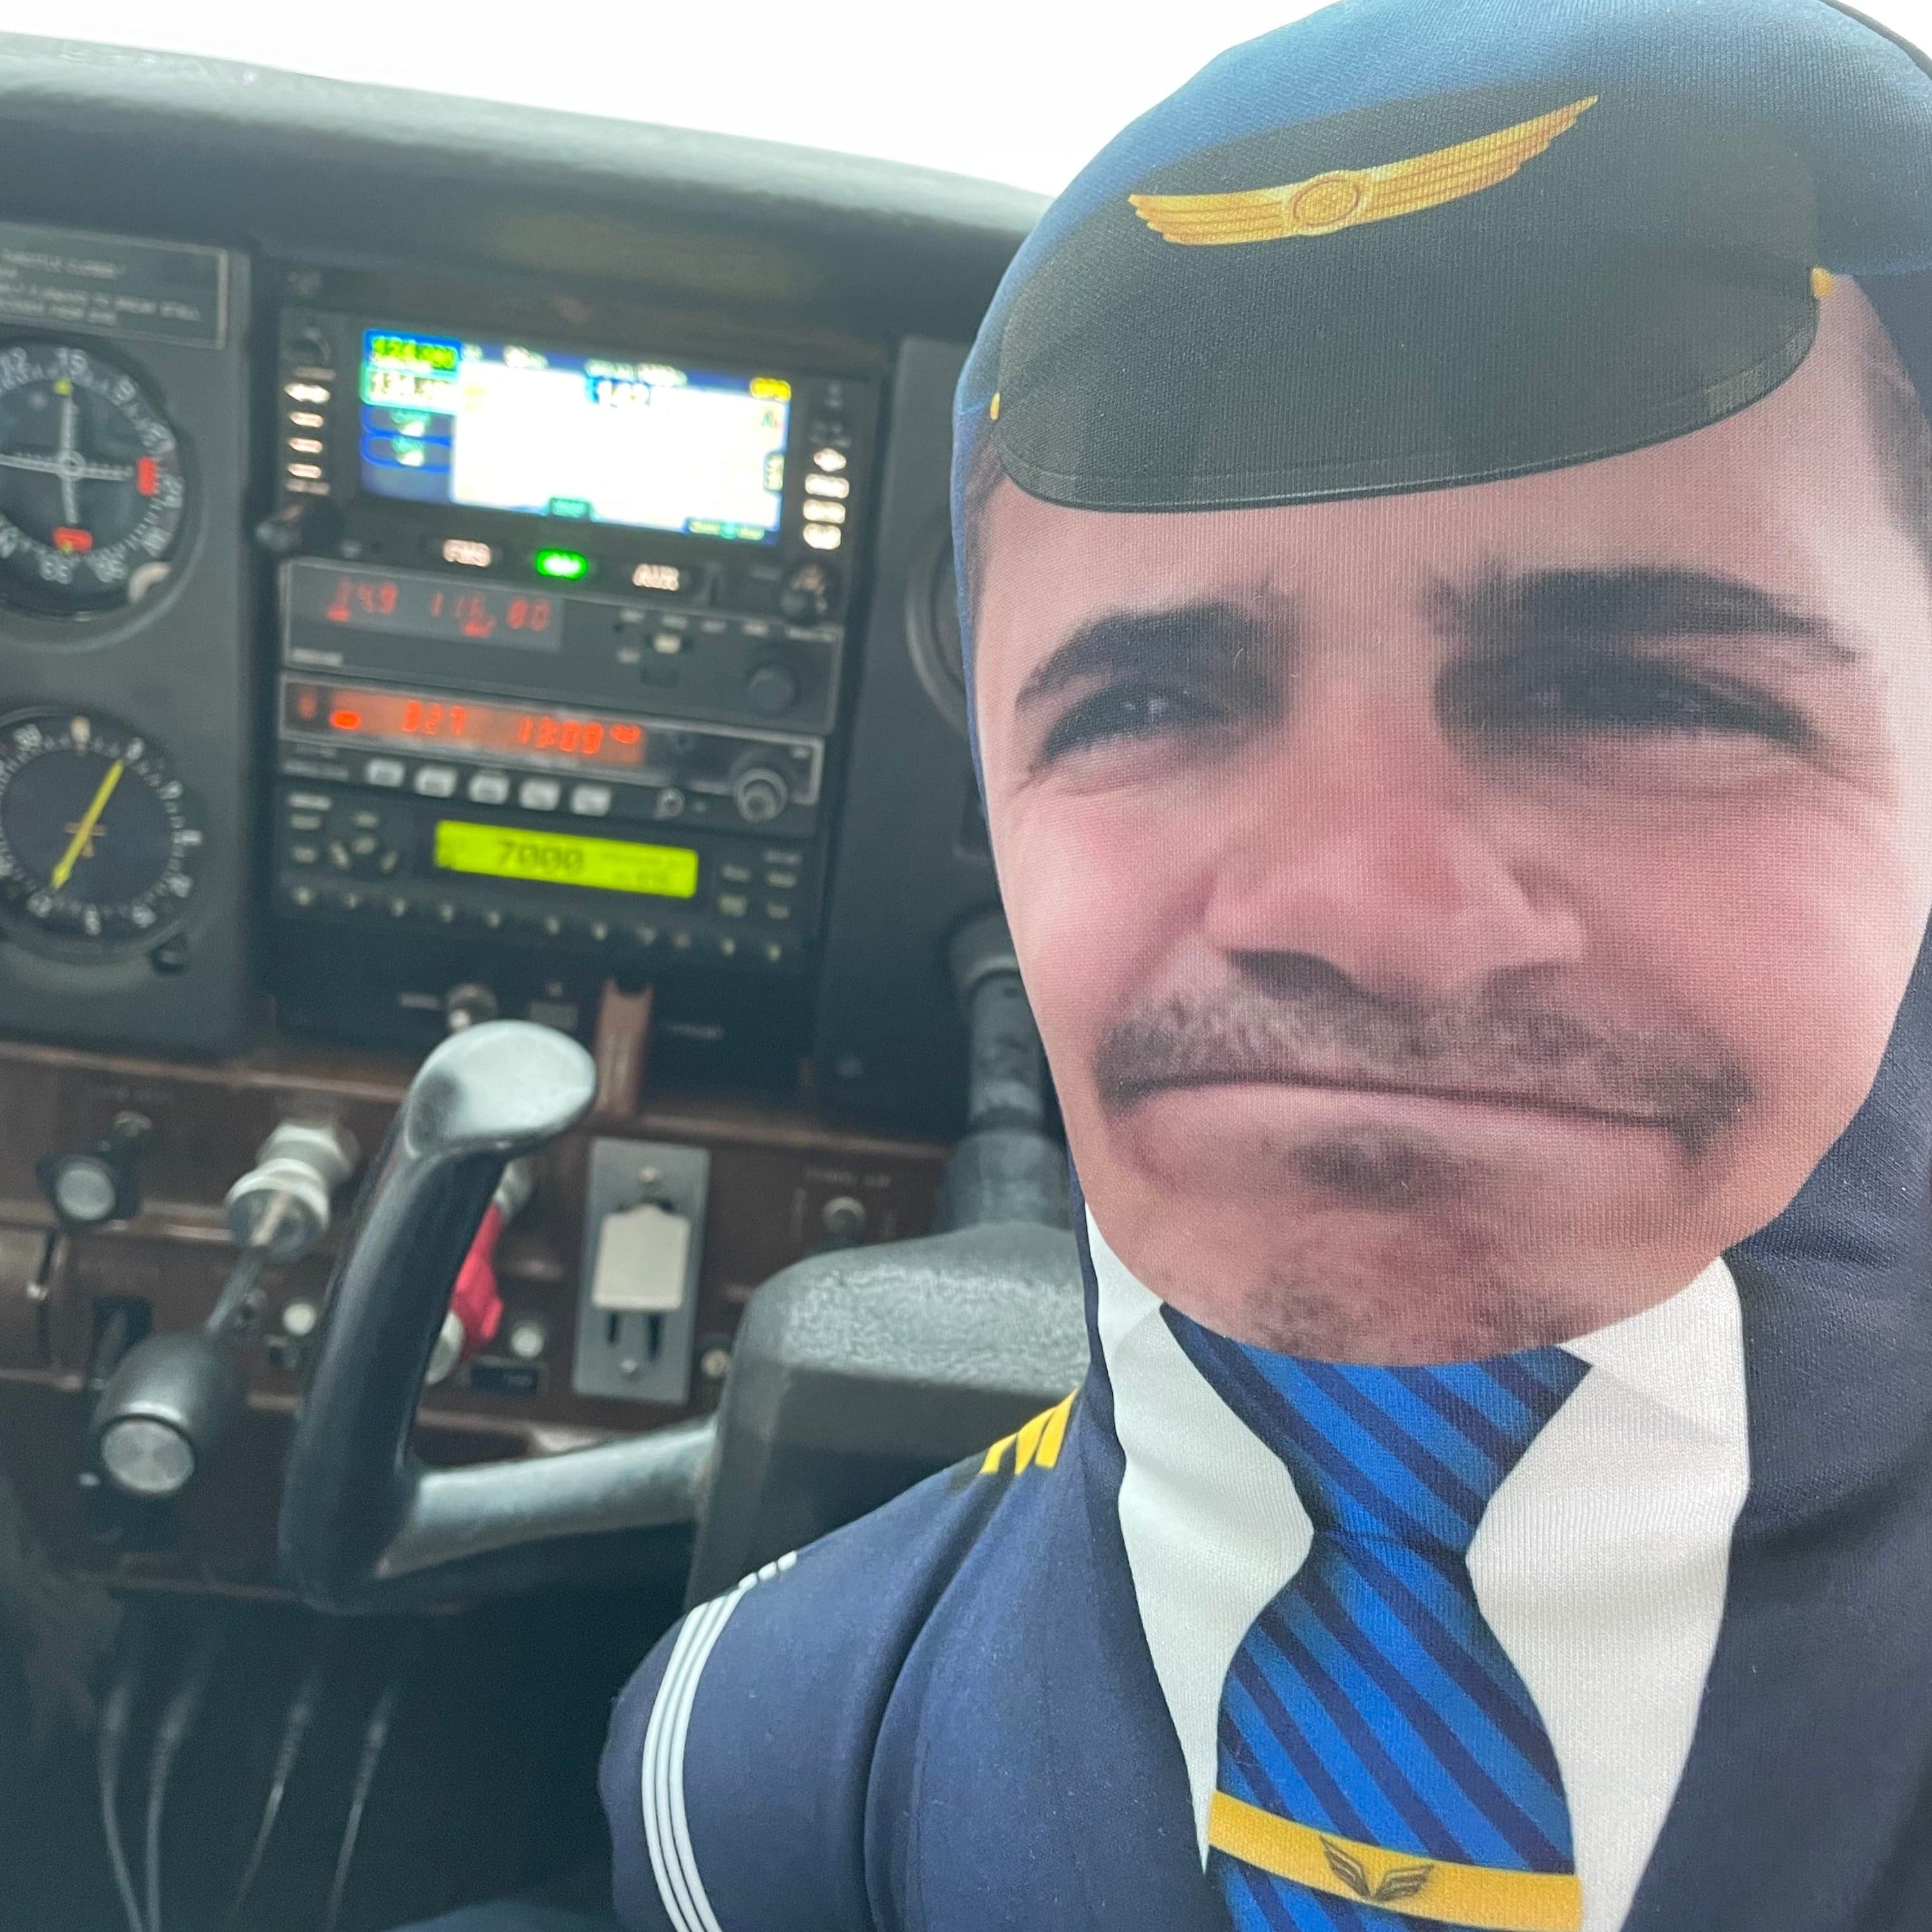 Pilot - Personalised Mini Me Doll